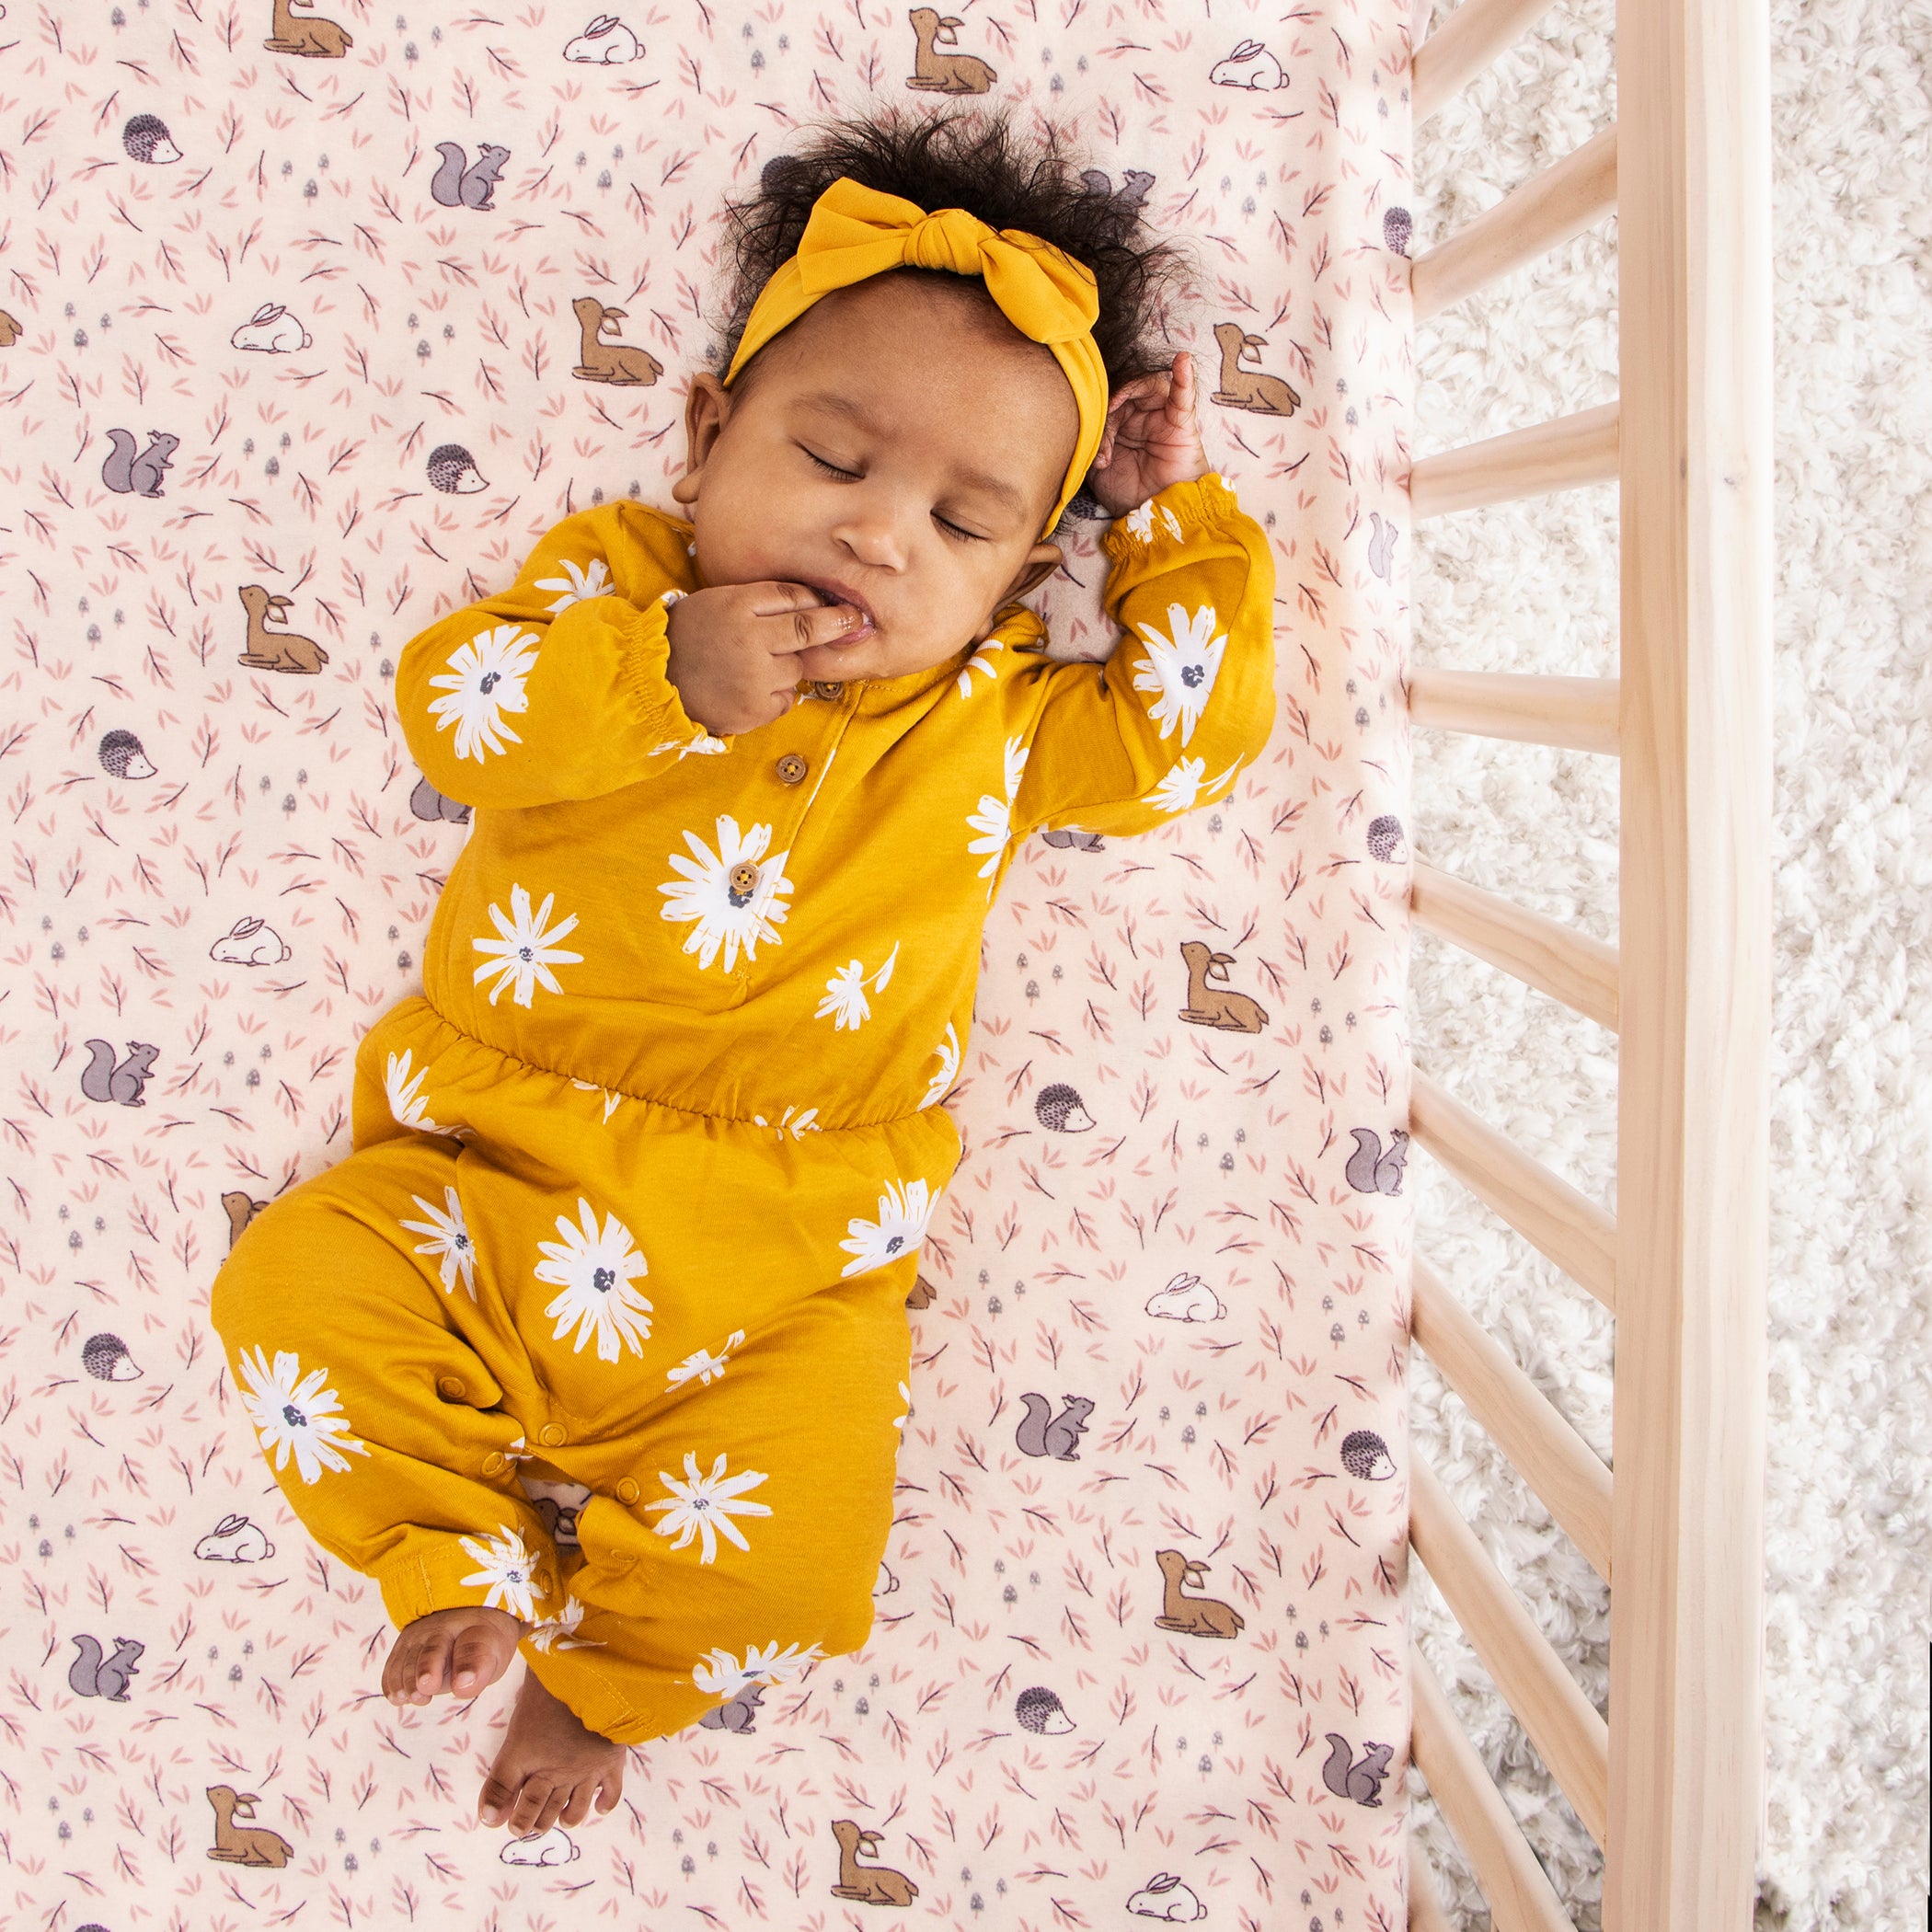 Sweet Baby Sleeping in crib with cute flannel sheet